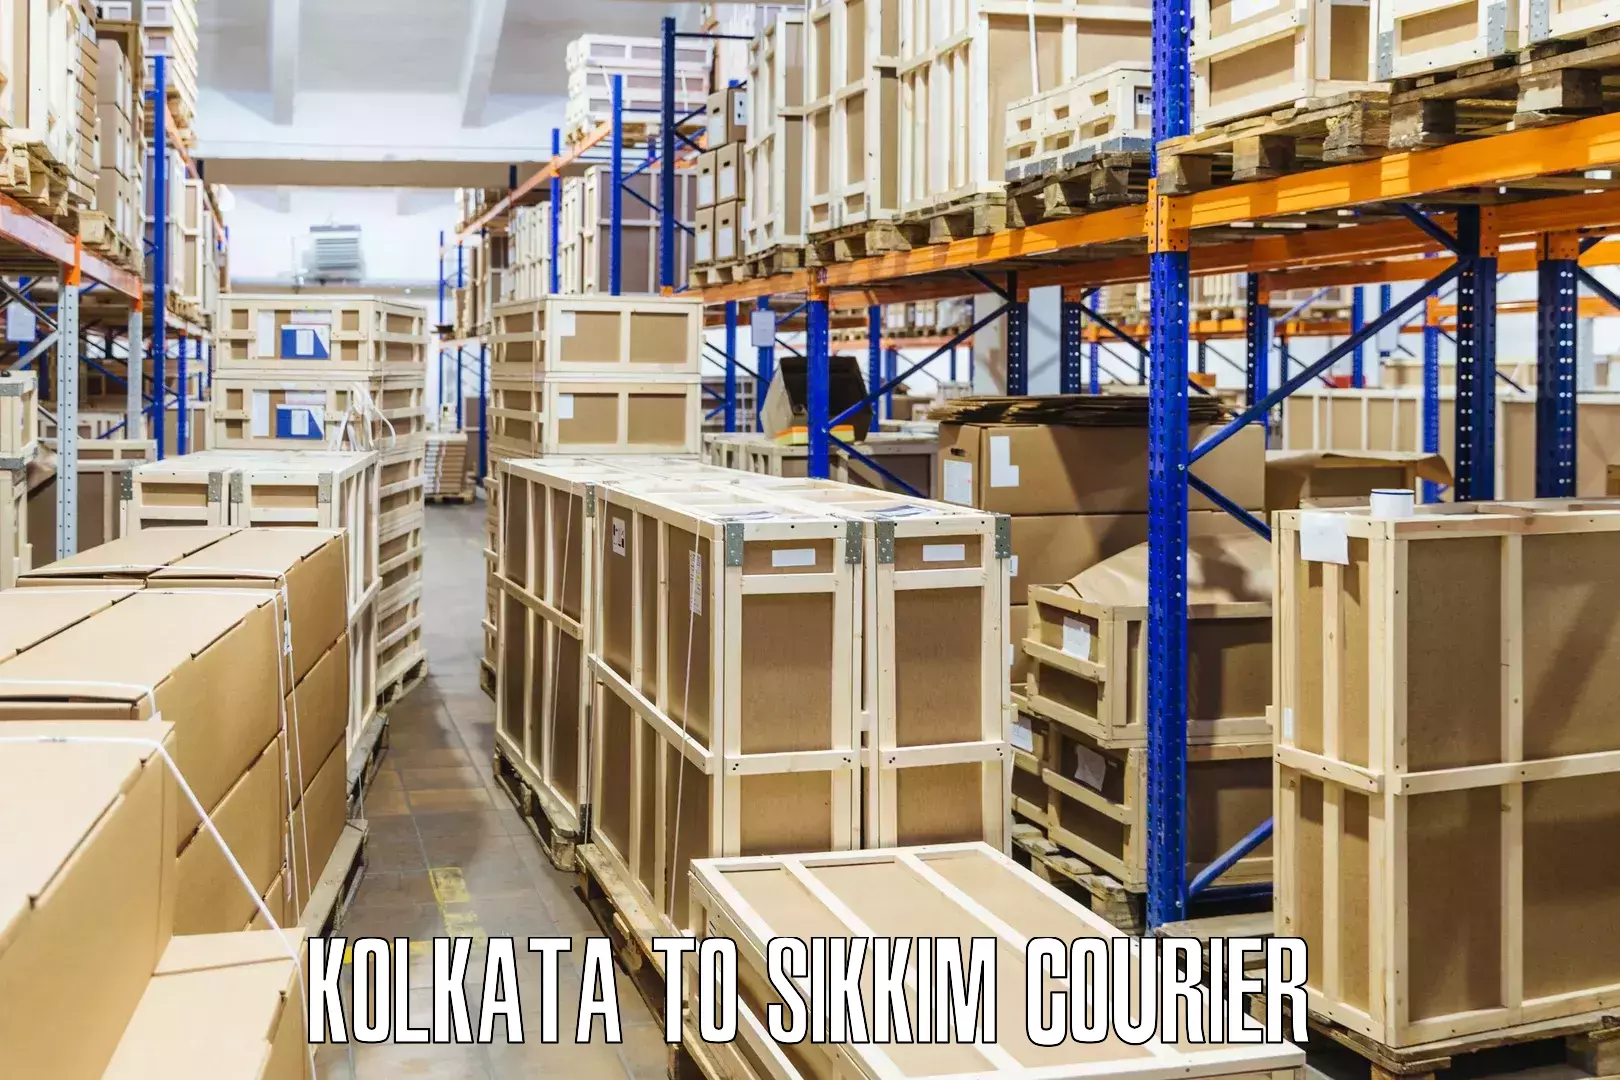 Modern delivery technologies Kolkata to Sikkim